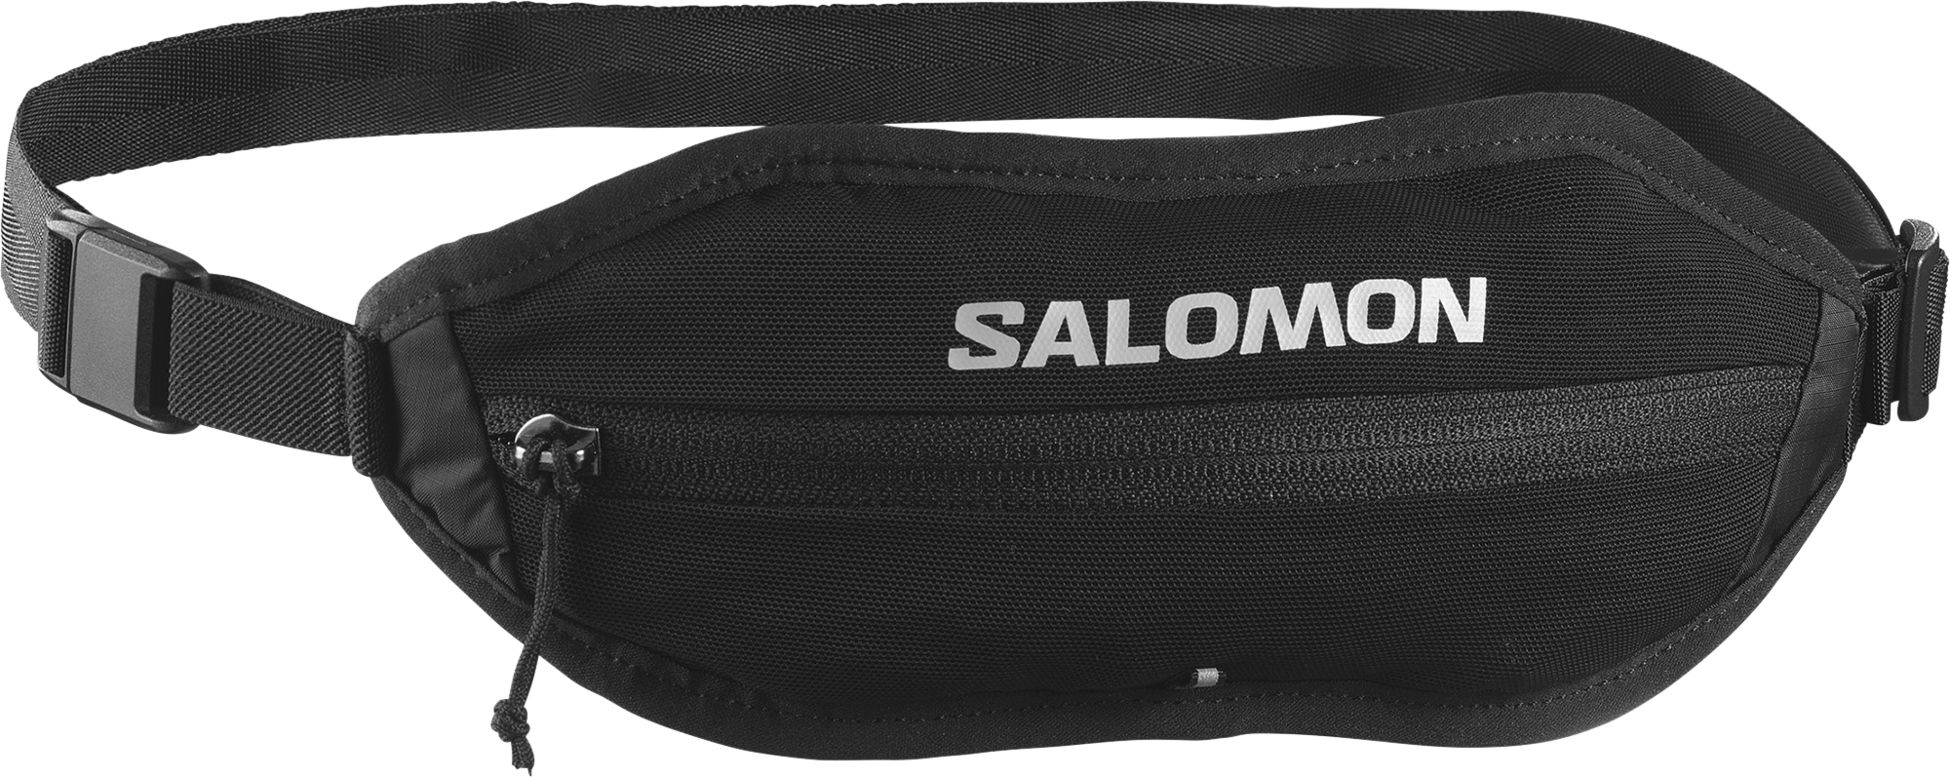 SALOMON, ACTIVE SLING BELT